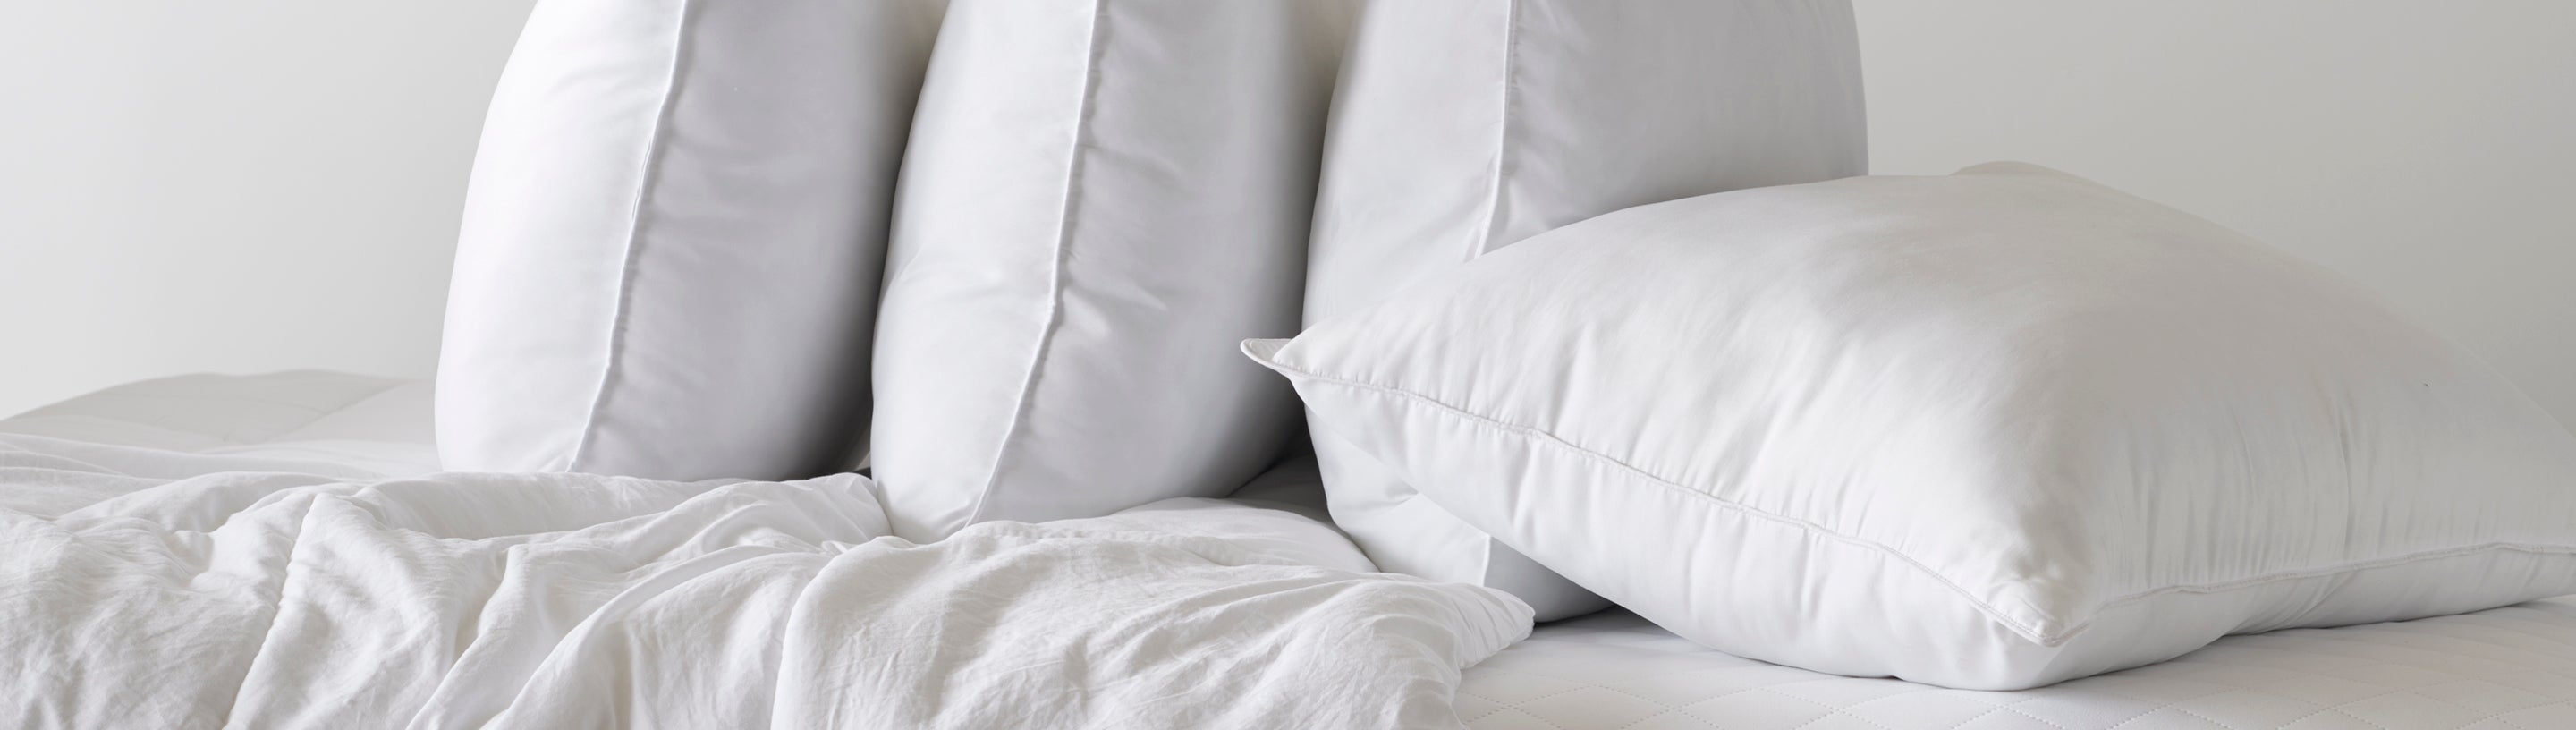 Overstuffed Luxury Plush Med/Firm Gel Filled Side/Back Sleeper Pillow –  Ella Jayne Team